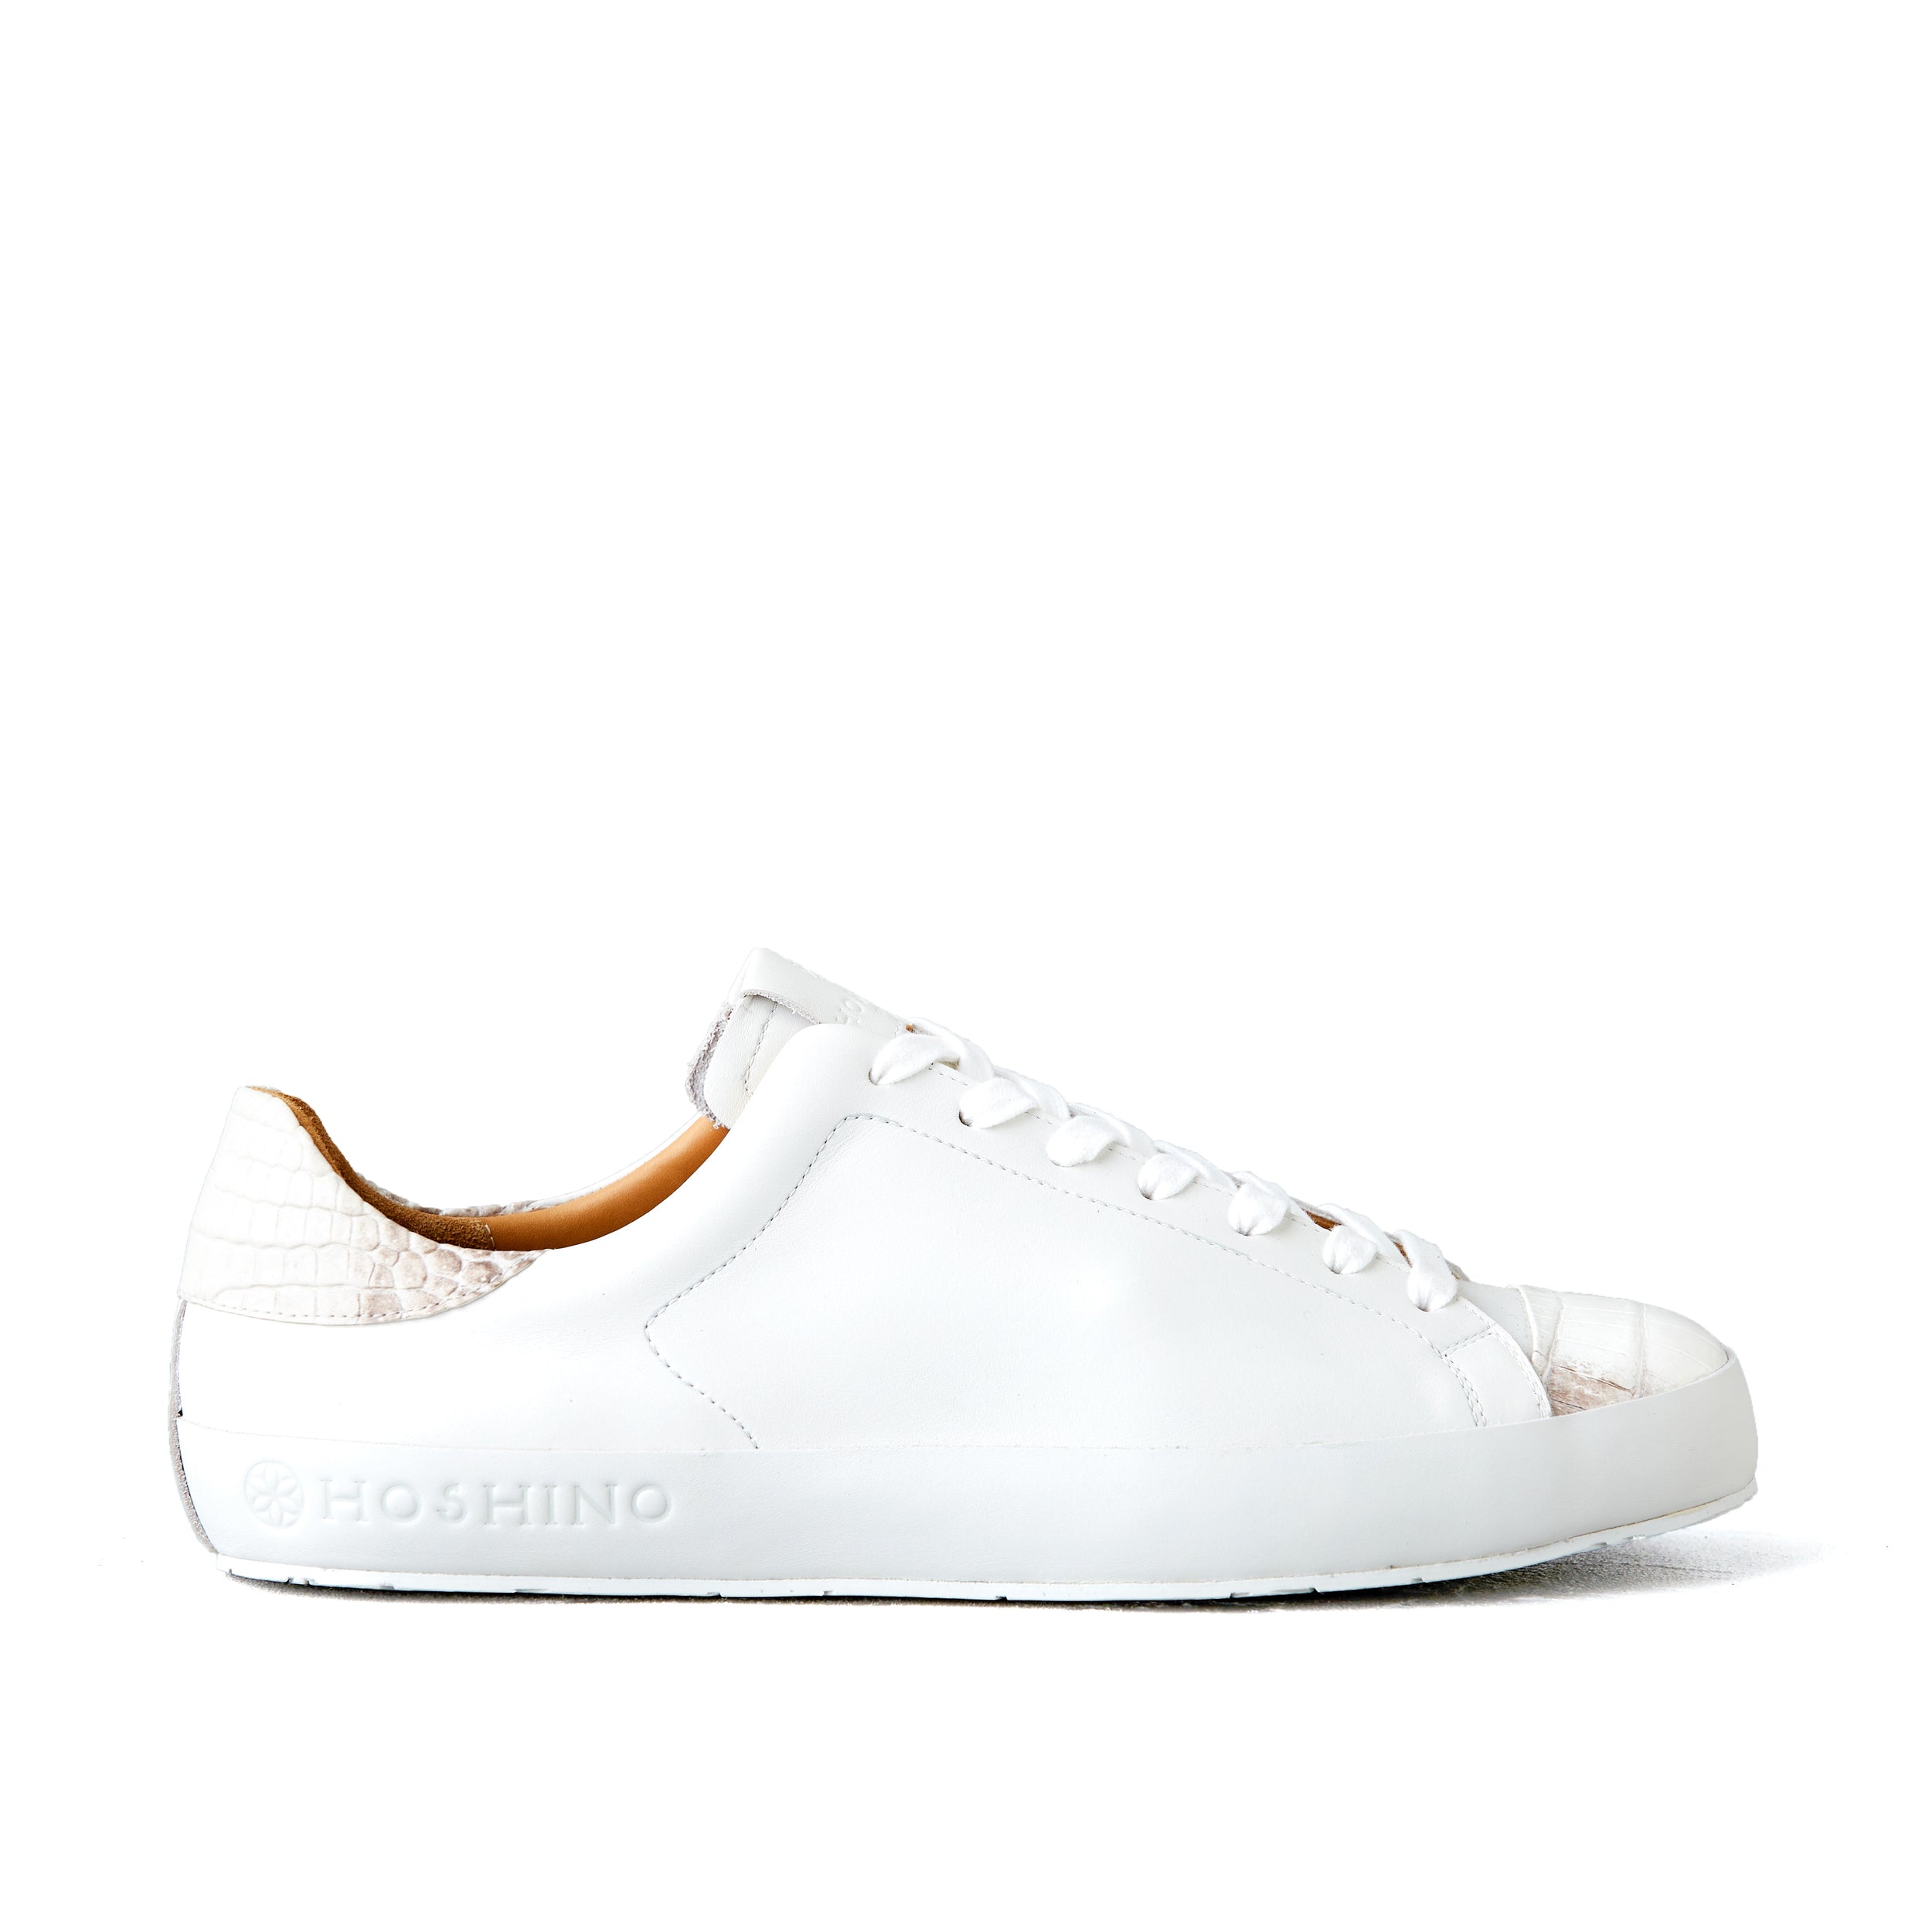 [men's] Liberte - low-top sneakers - combination toe white on white crocodile